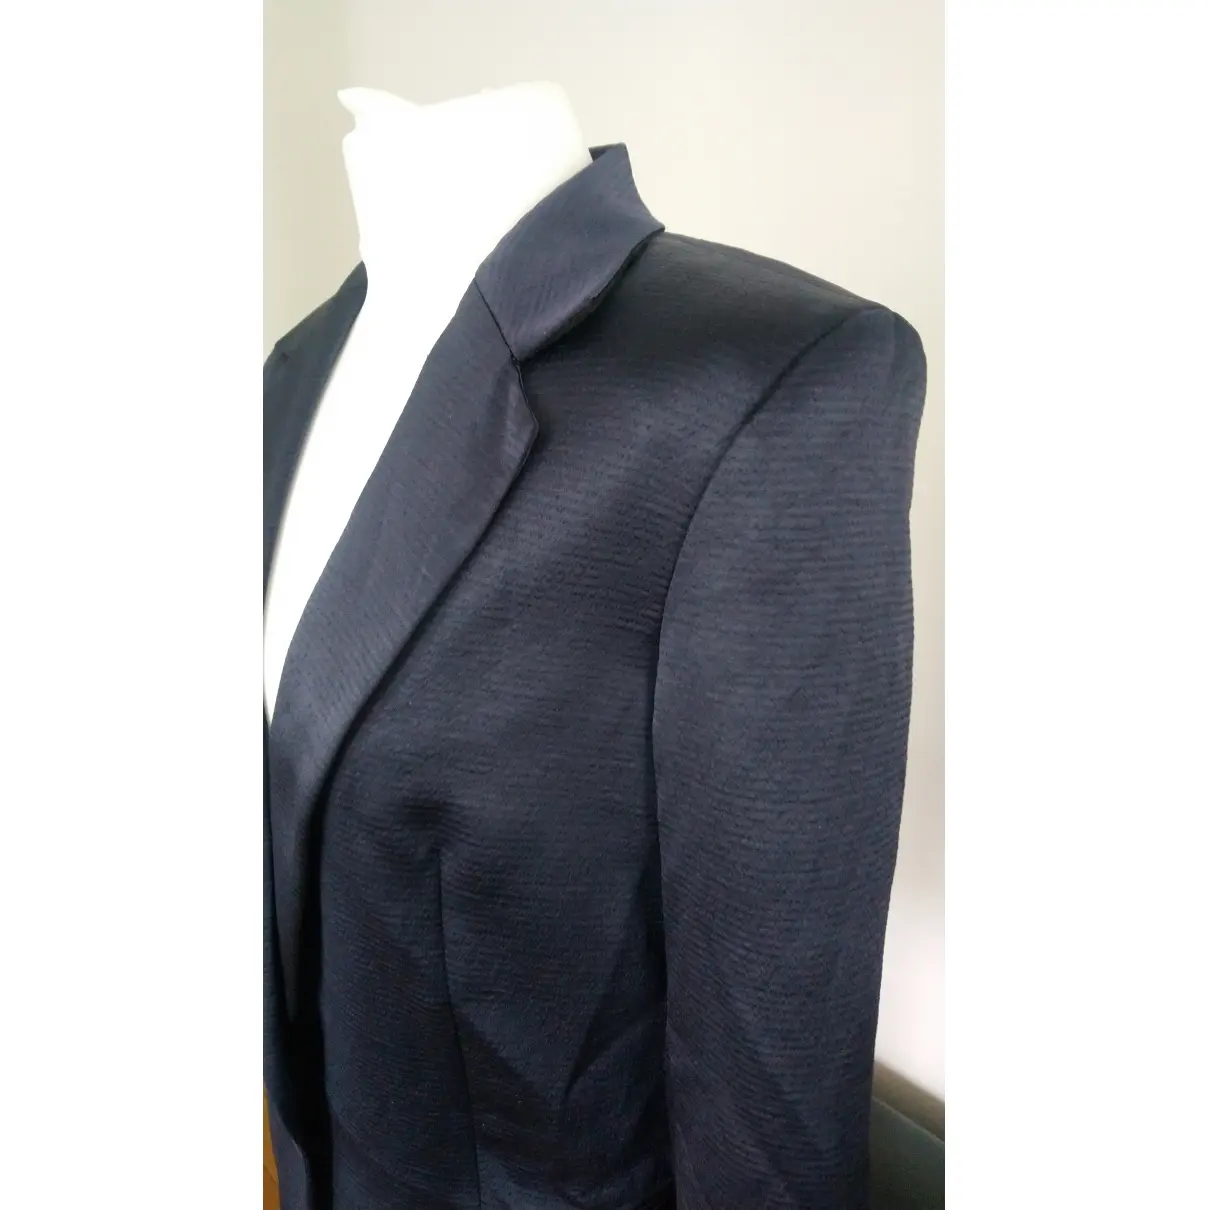 Buy Ba&sh Suit jacket online